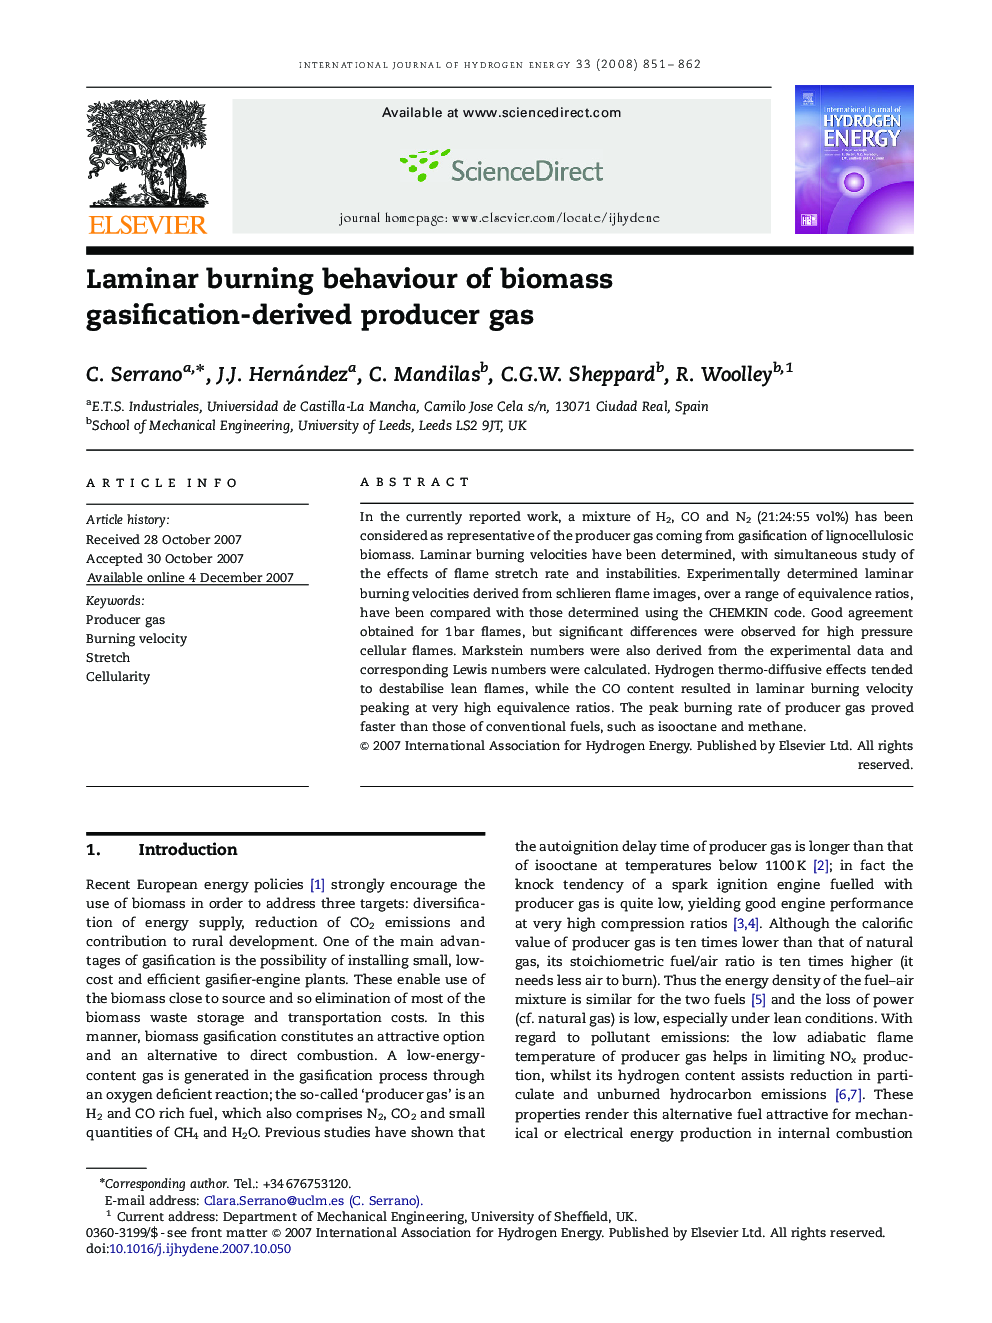 Laminar burning behaviour of biomass gasification-derived producer gas